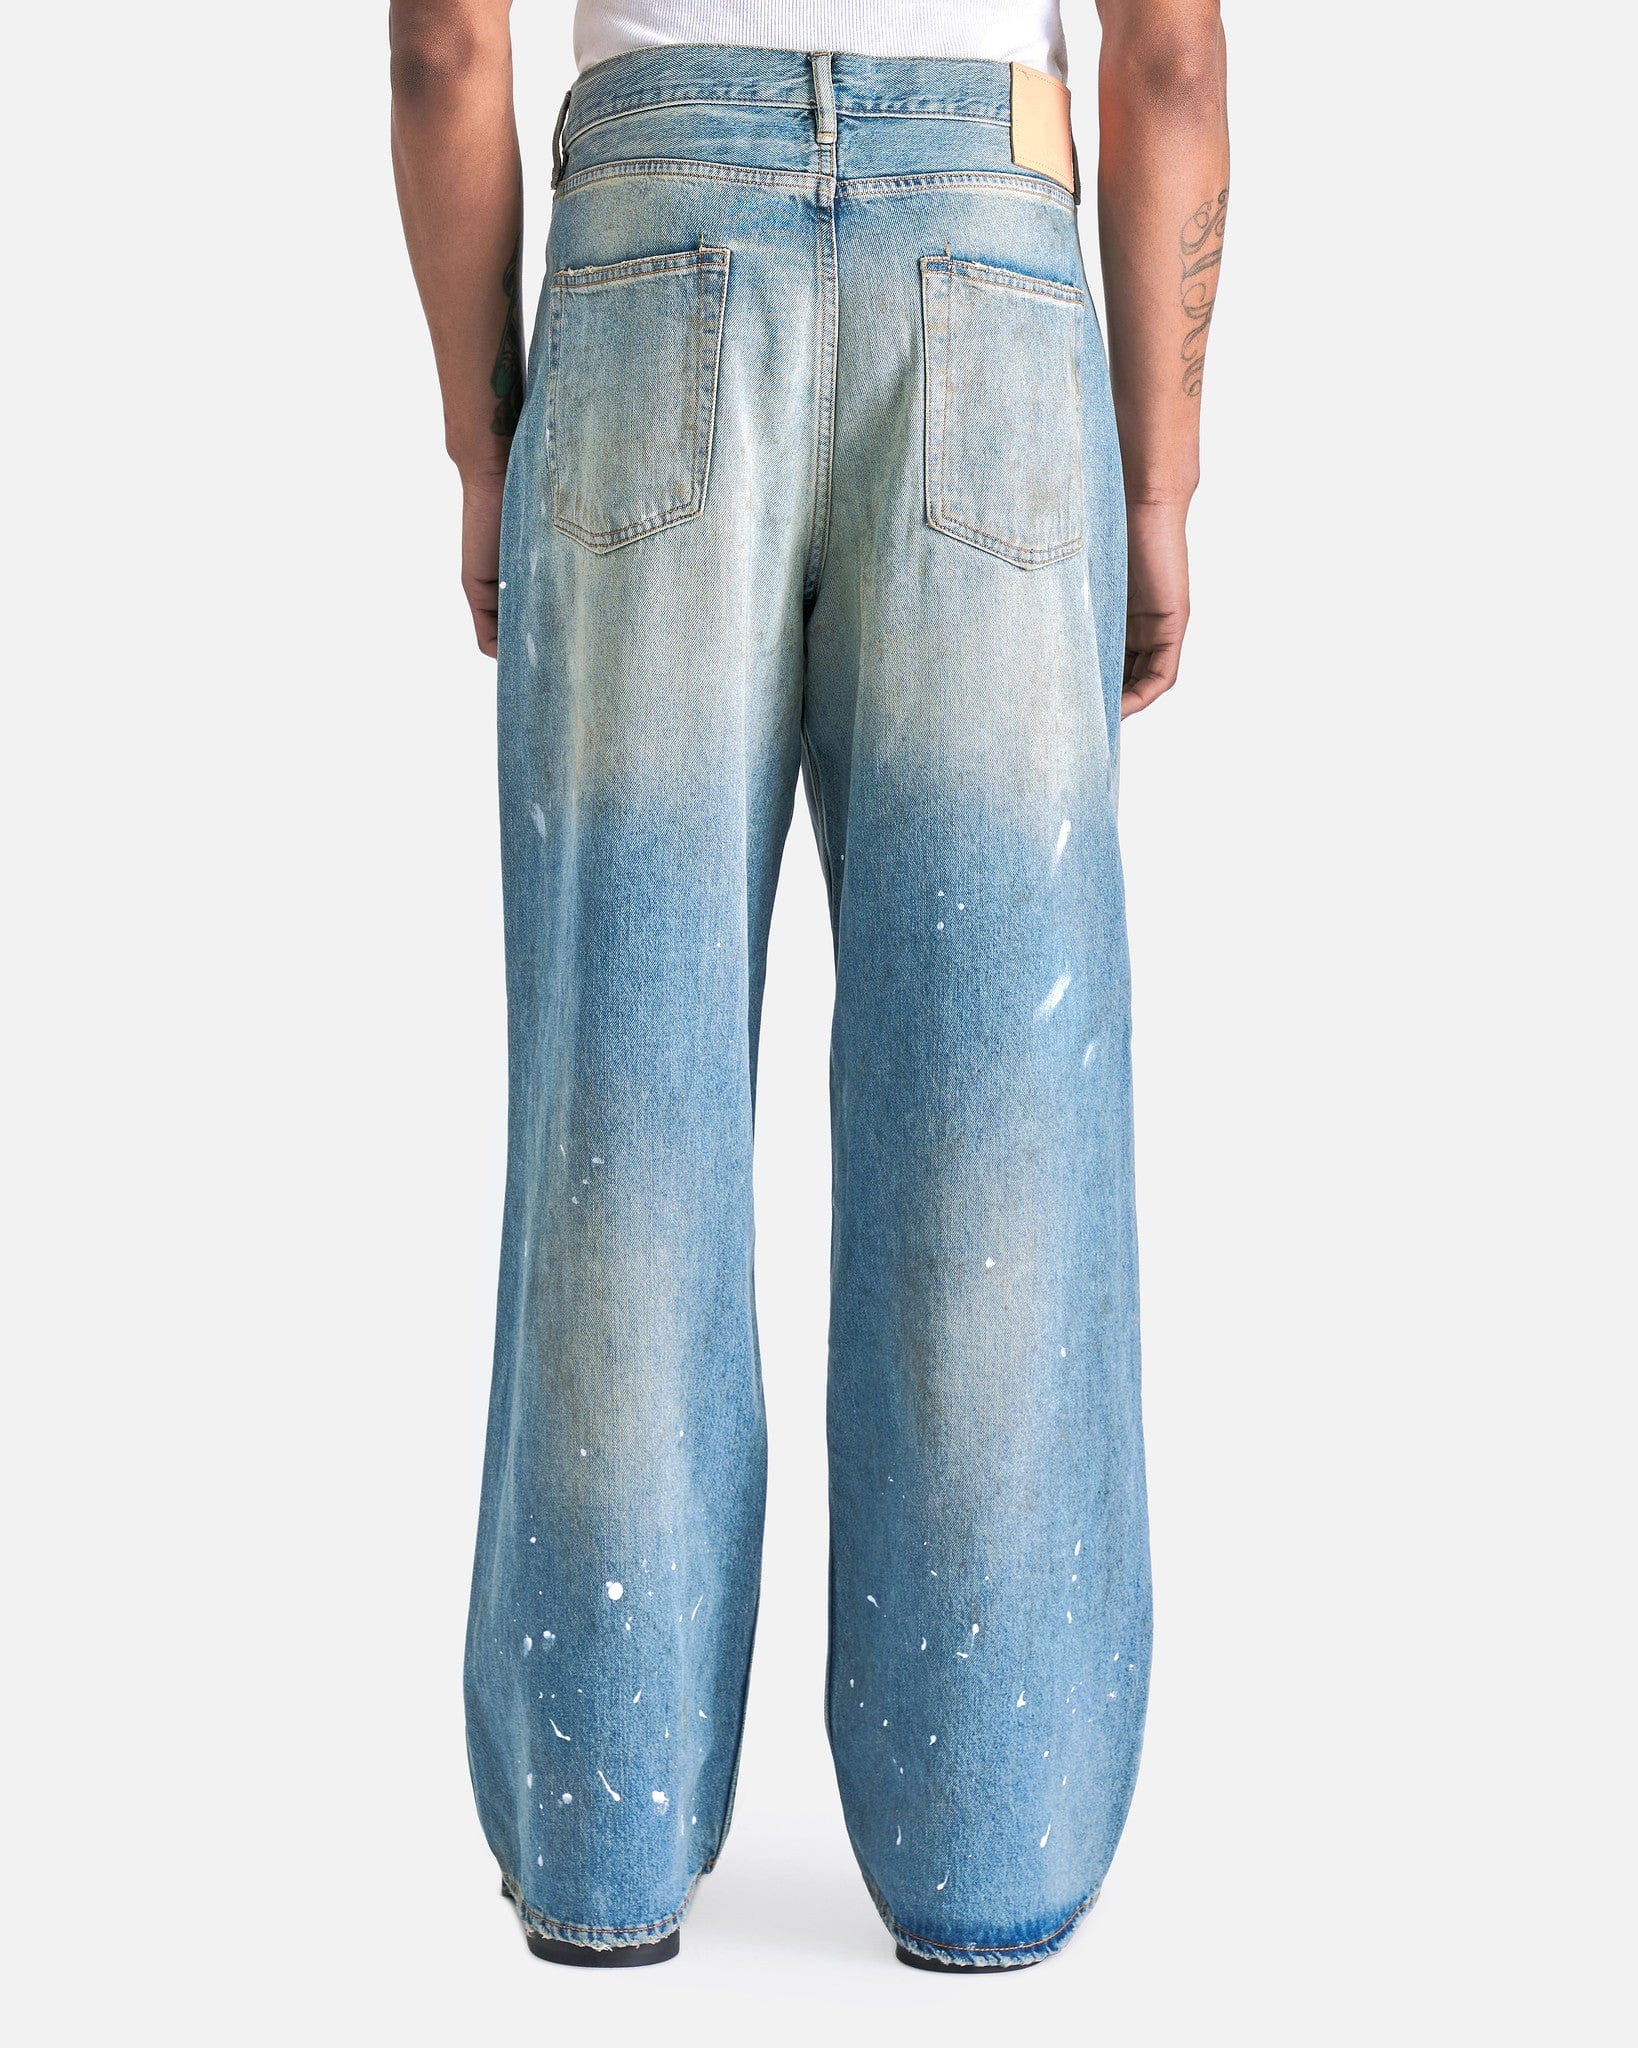 Acne Studios Men's Jeans Loose Fit 1981M Jeans in Light Blue